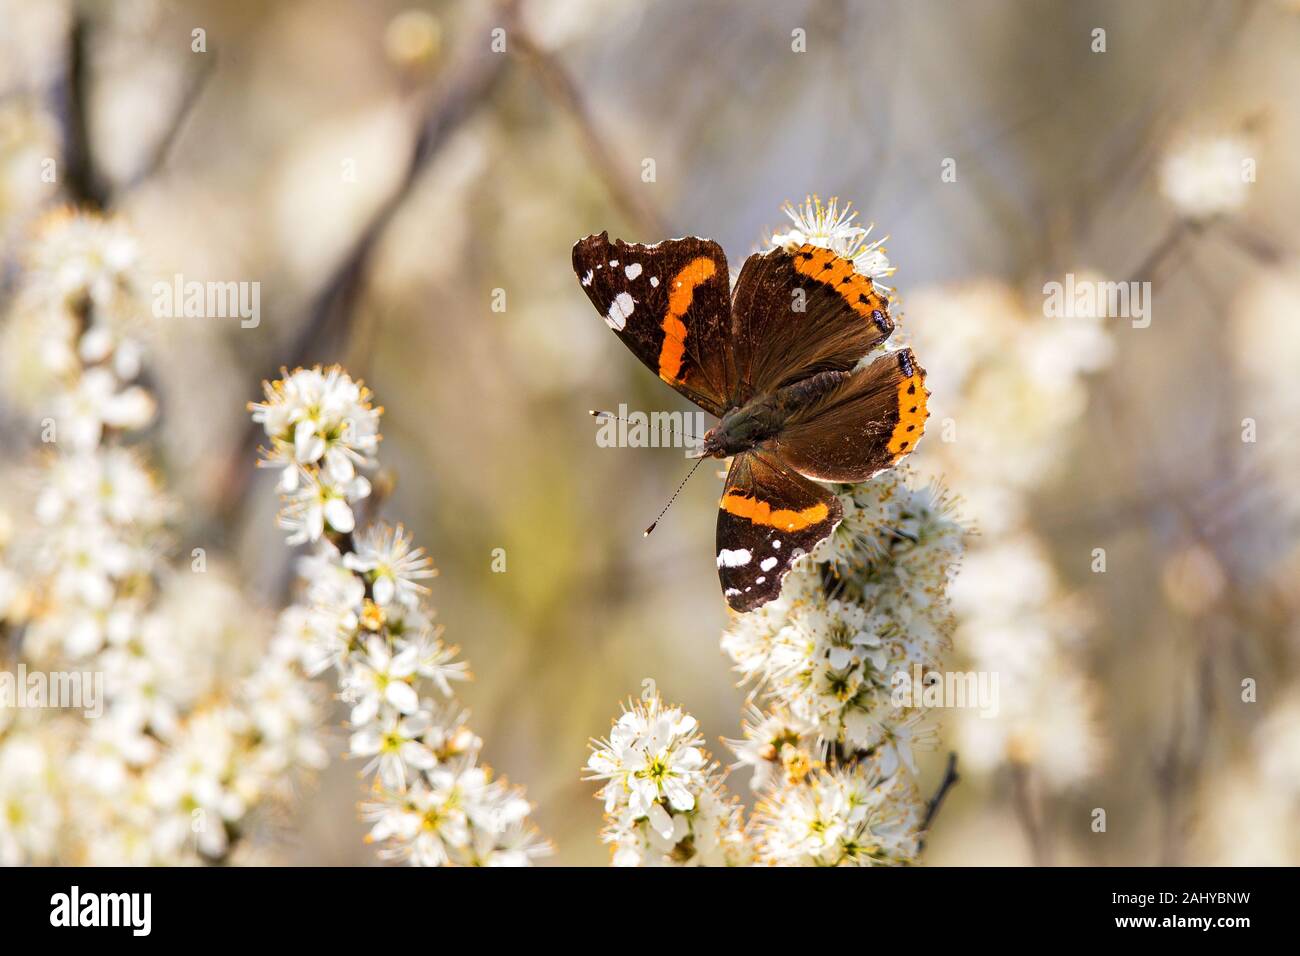 Vulcain (Vanessa atalanta) butterfly sitting on white blossom dans arbre fleurissant au printemps, Bade-Wurtemberg, Allemagne Banque D'Images